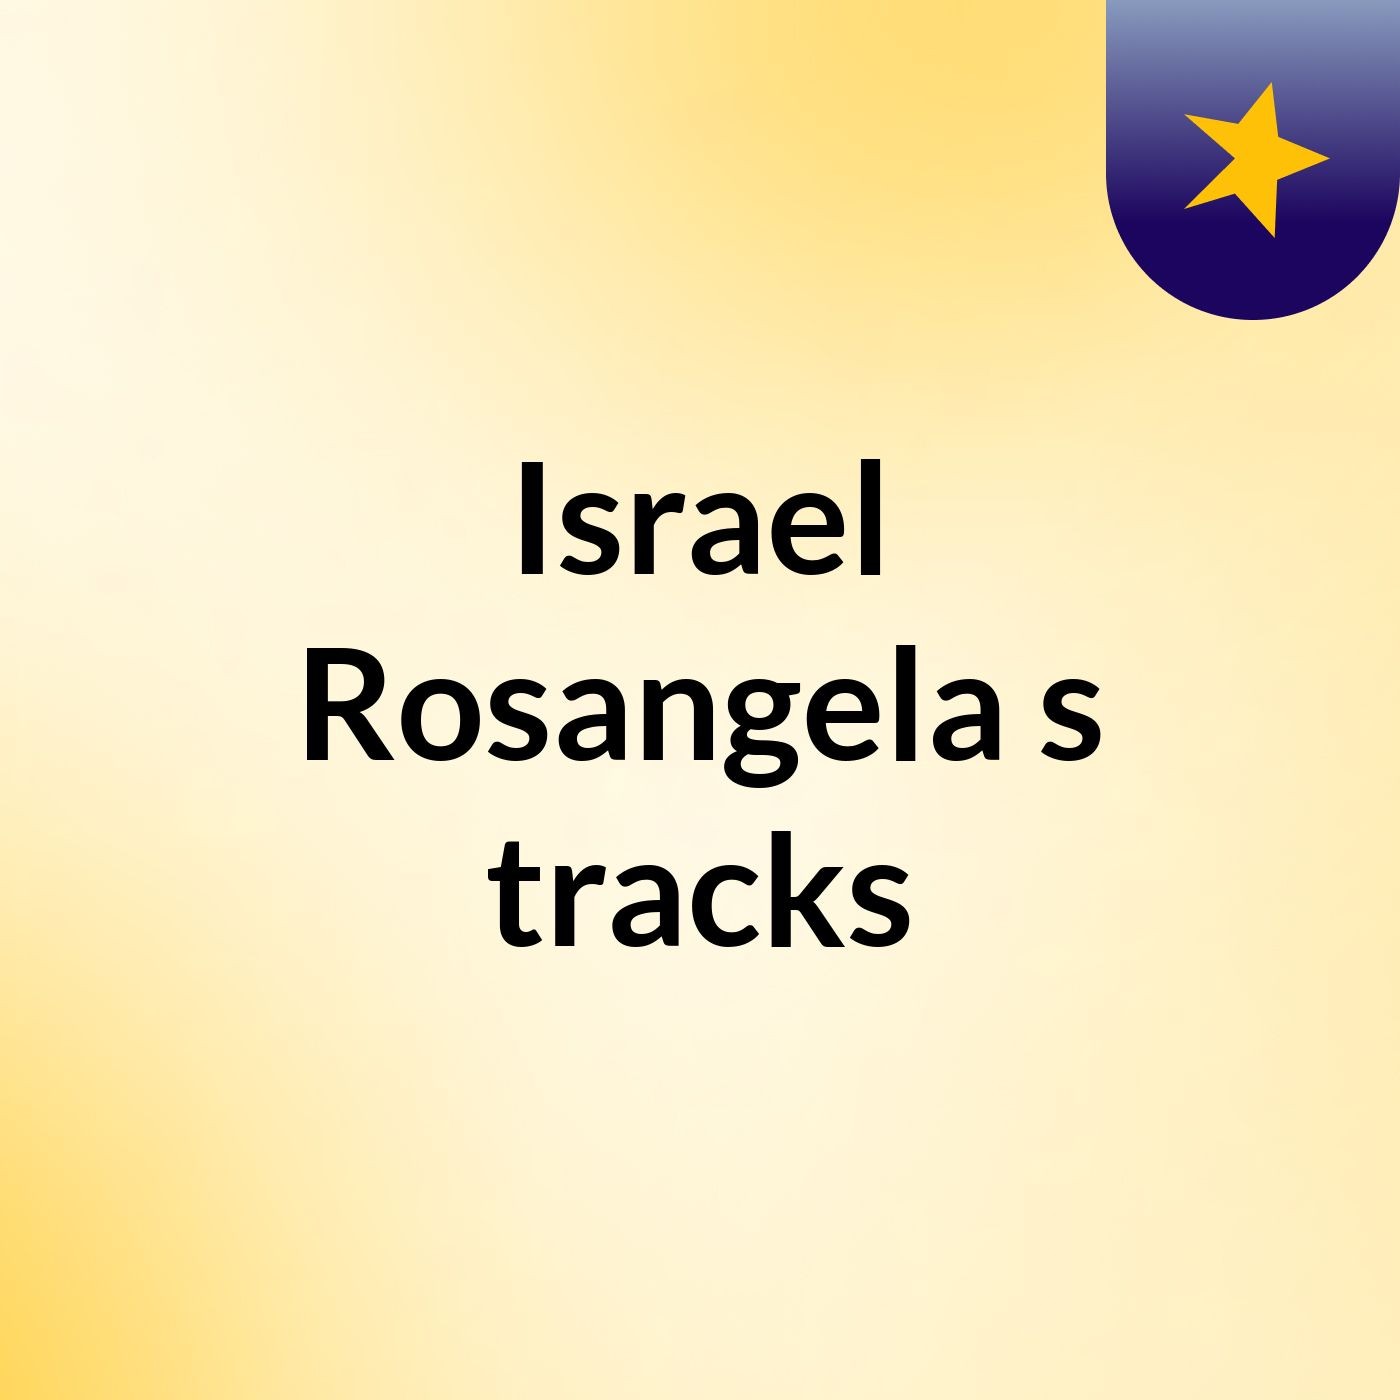 Israel Rosangela's tracks